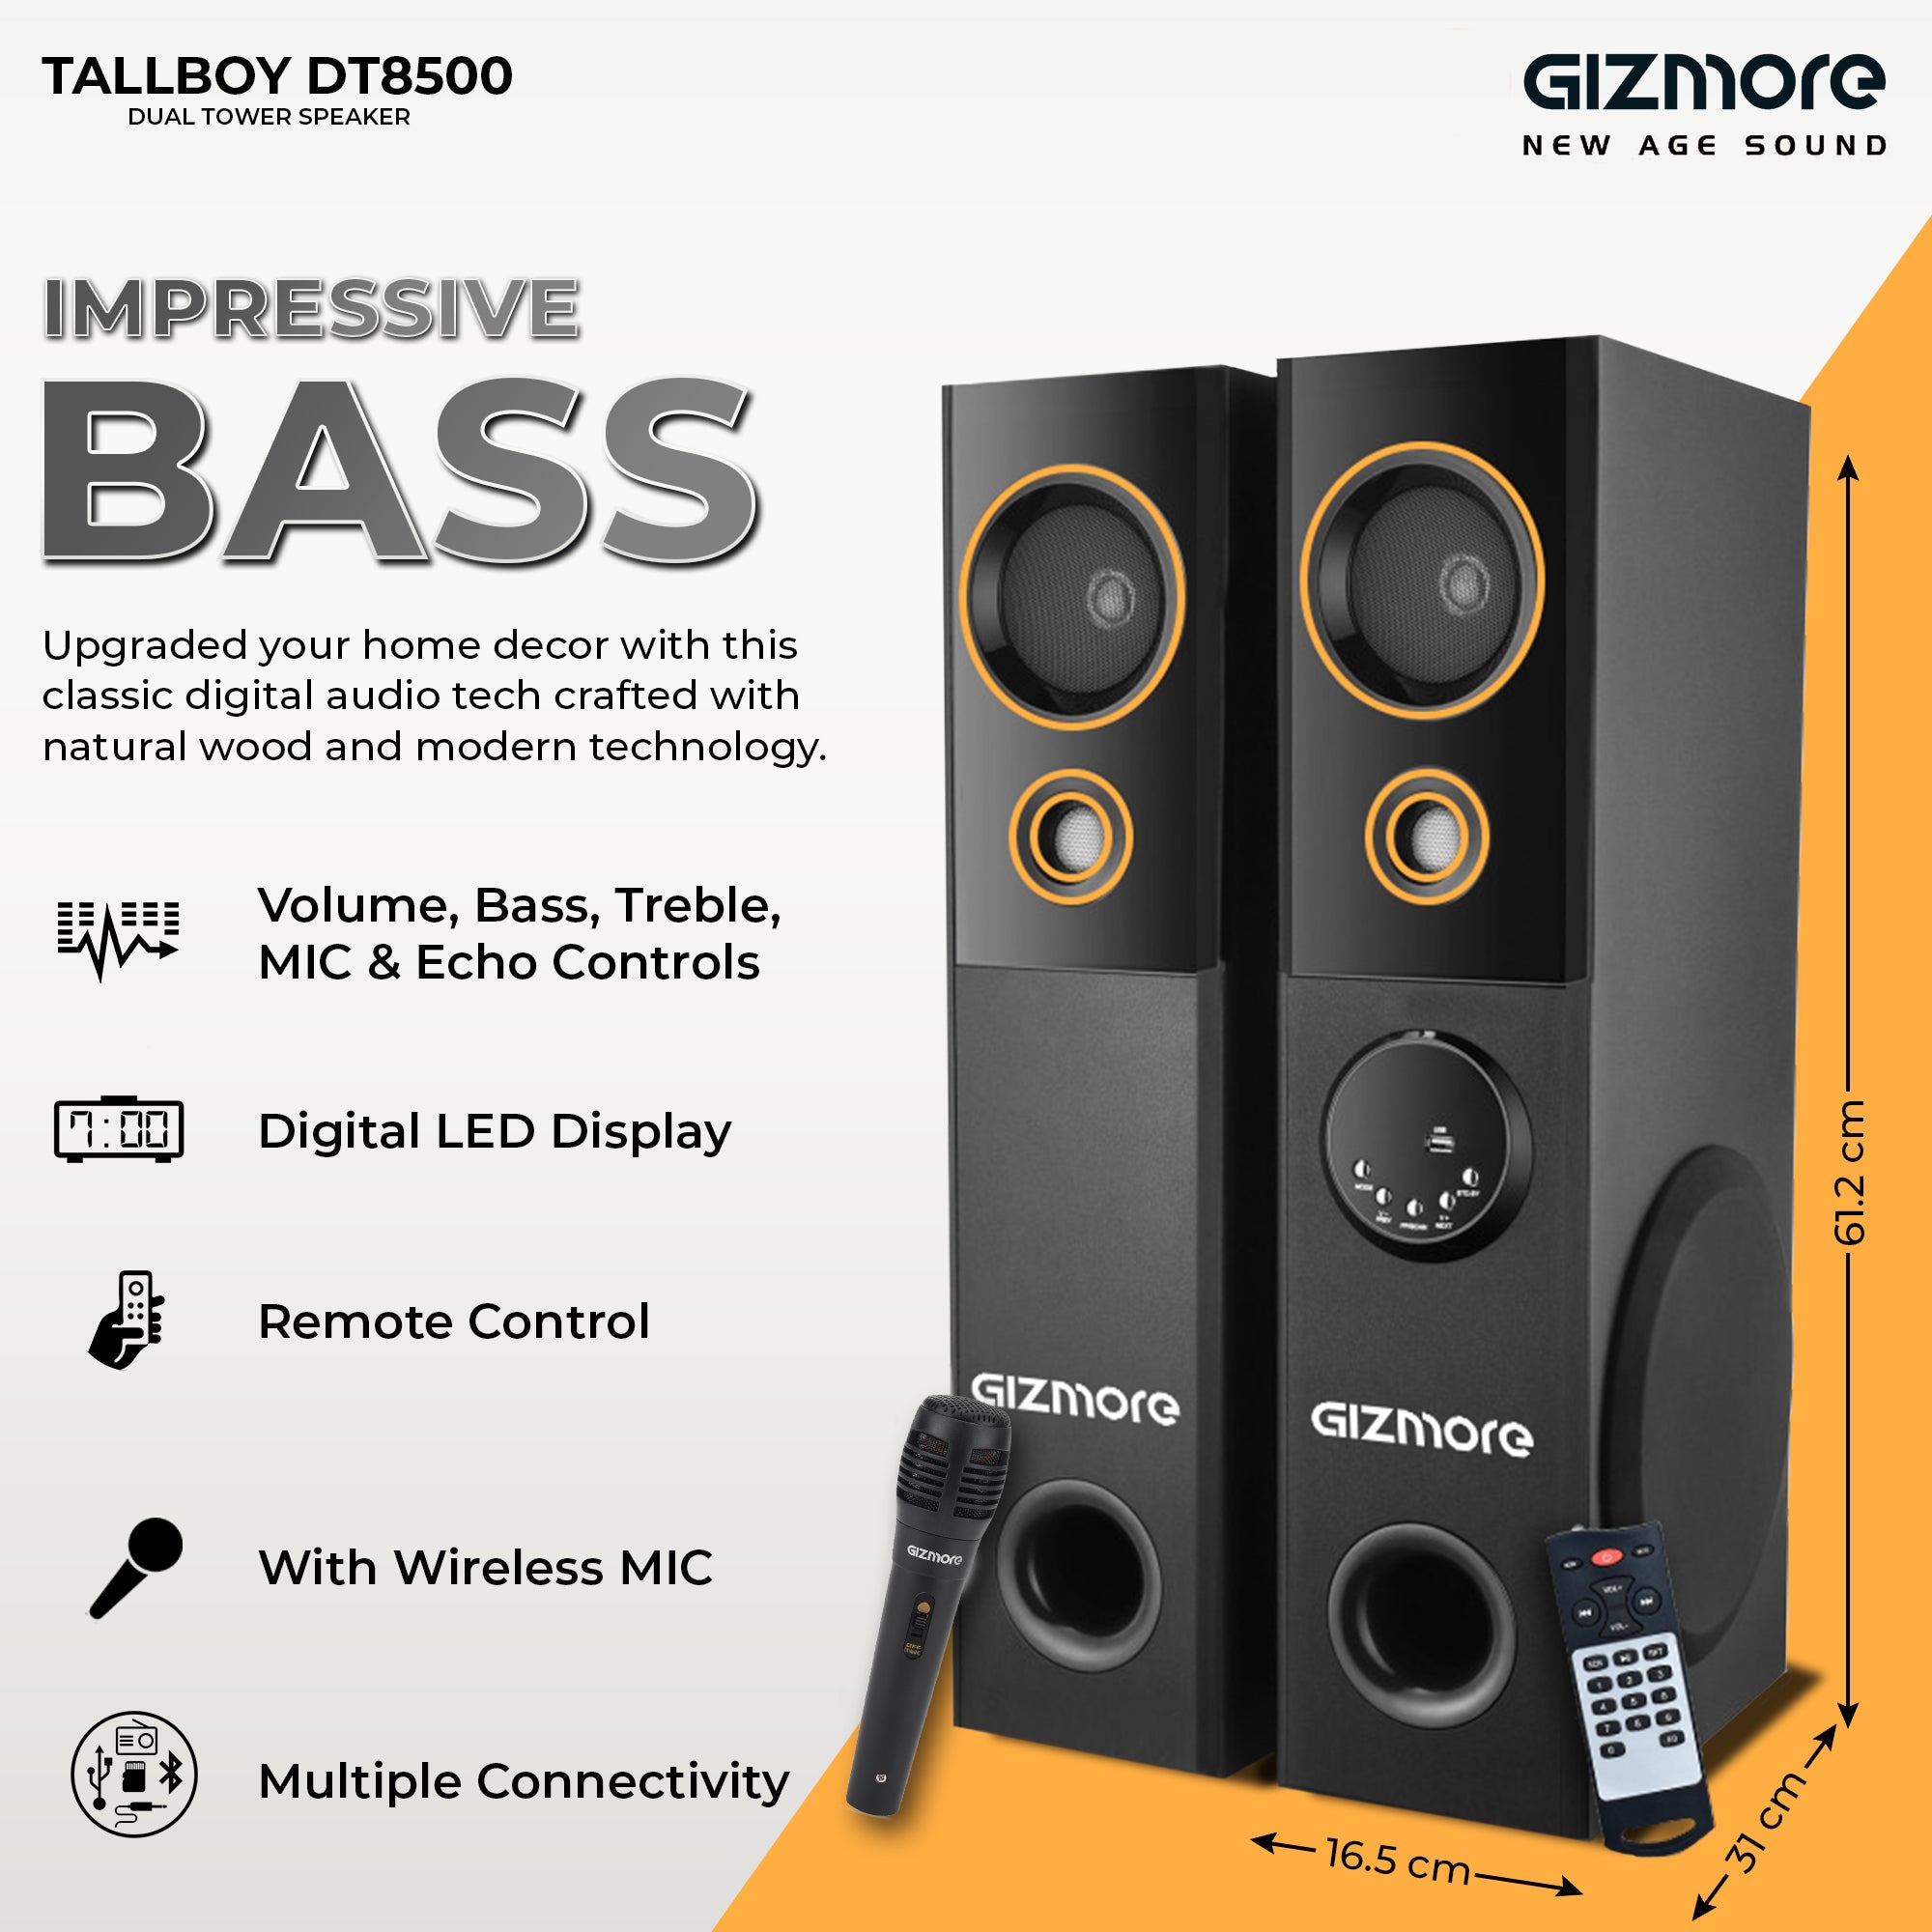 GIZMORE GIZ Tallboy DT8500 80 Watt Wireless Bluetooth Multimedia Dual Tower Speaker | Echo Sound Control |Full Remote Control  | LED Display, USB, FM Party Speaker Home Theater Karaoke Support (Black)